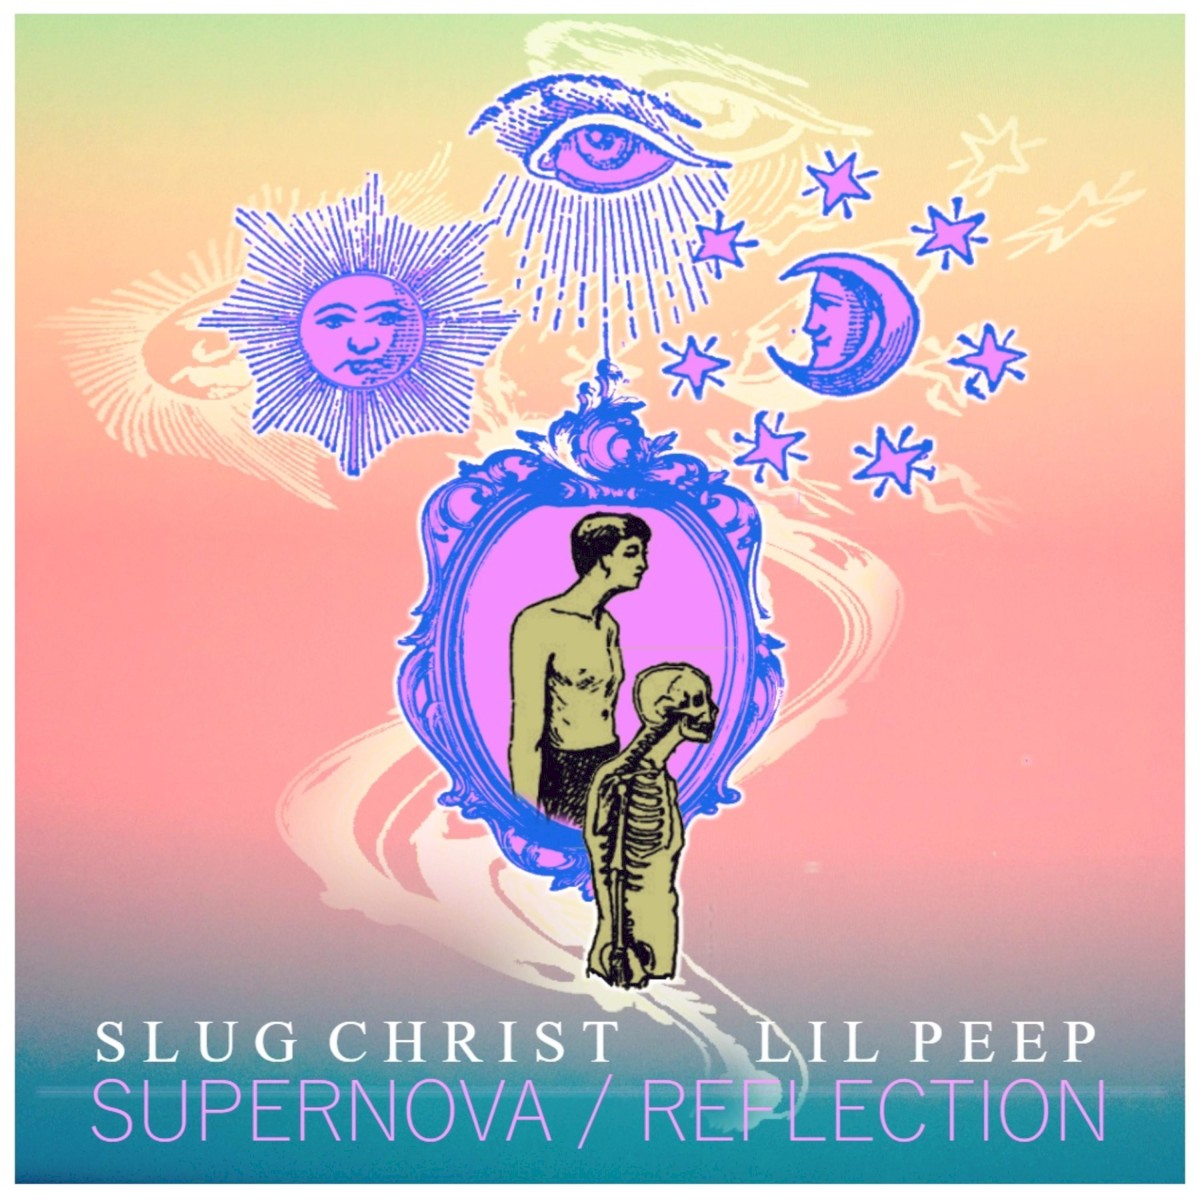 Release “Supernova / Reflection” by Slug Christ feat. Lil Peep - Cover ...